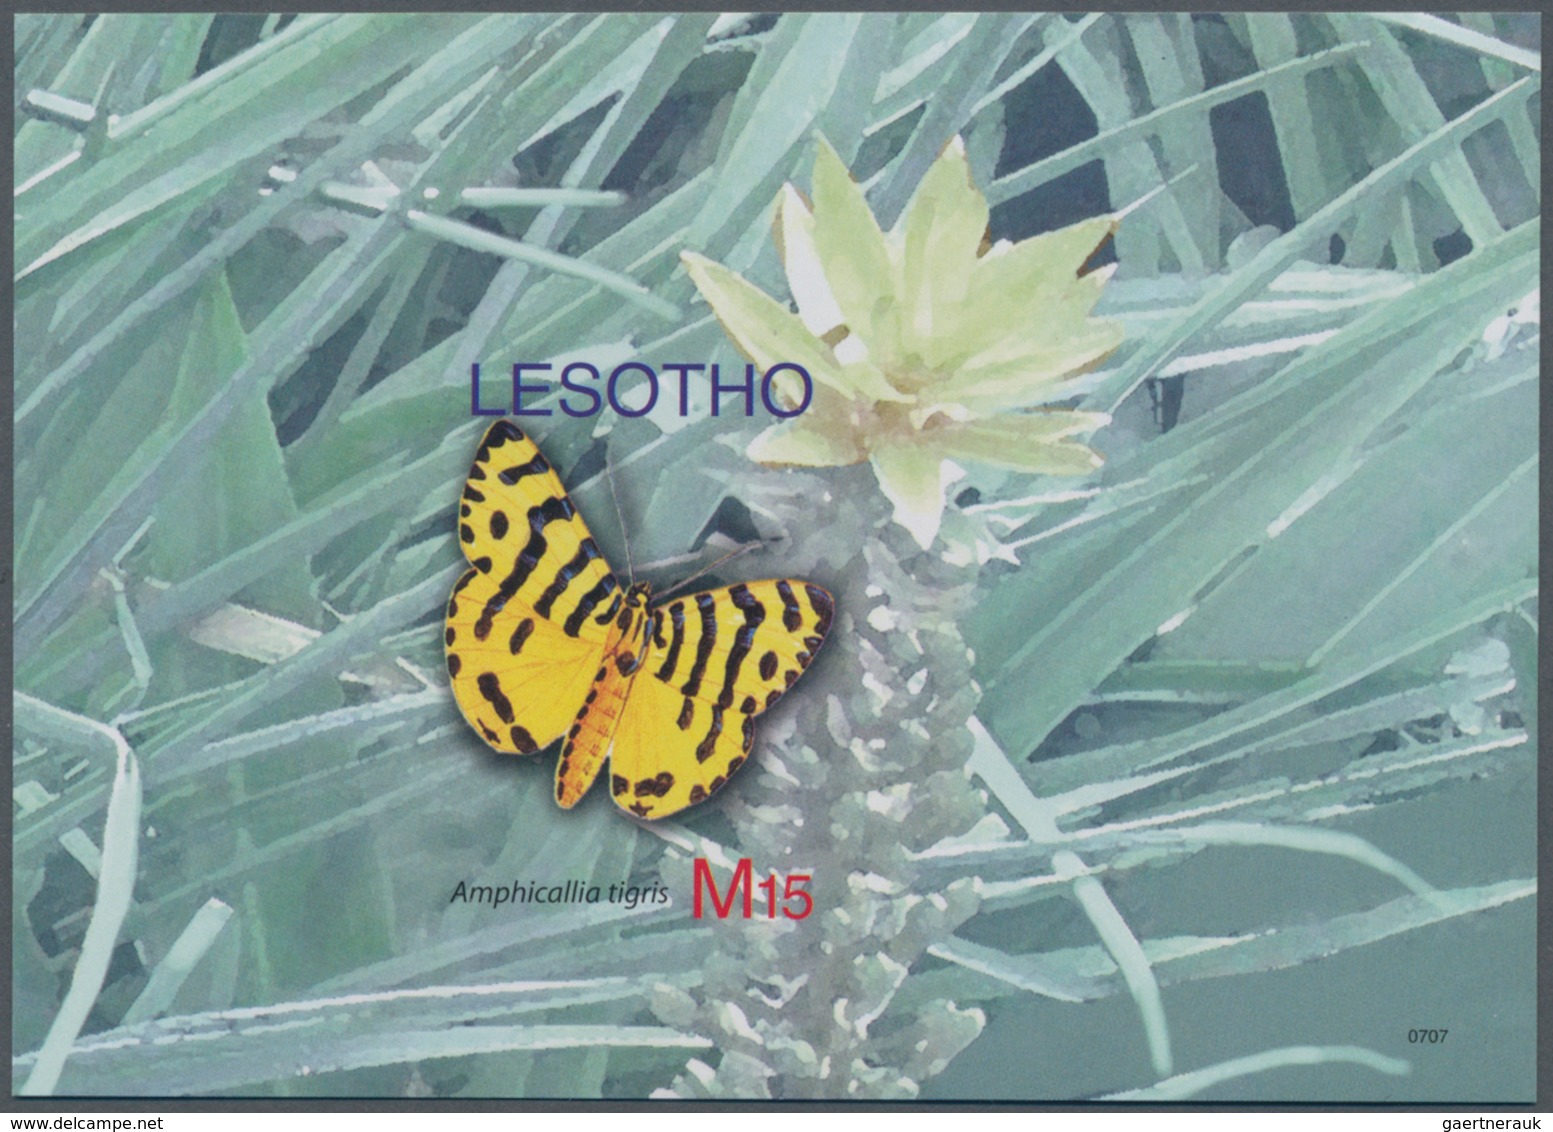 Thematik: Tiere-Schmetterlinge / Animals-butterflies: 2007, Lesotho. Imperforate Souvenir Sheet (1 V - Schmetterlinge